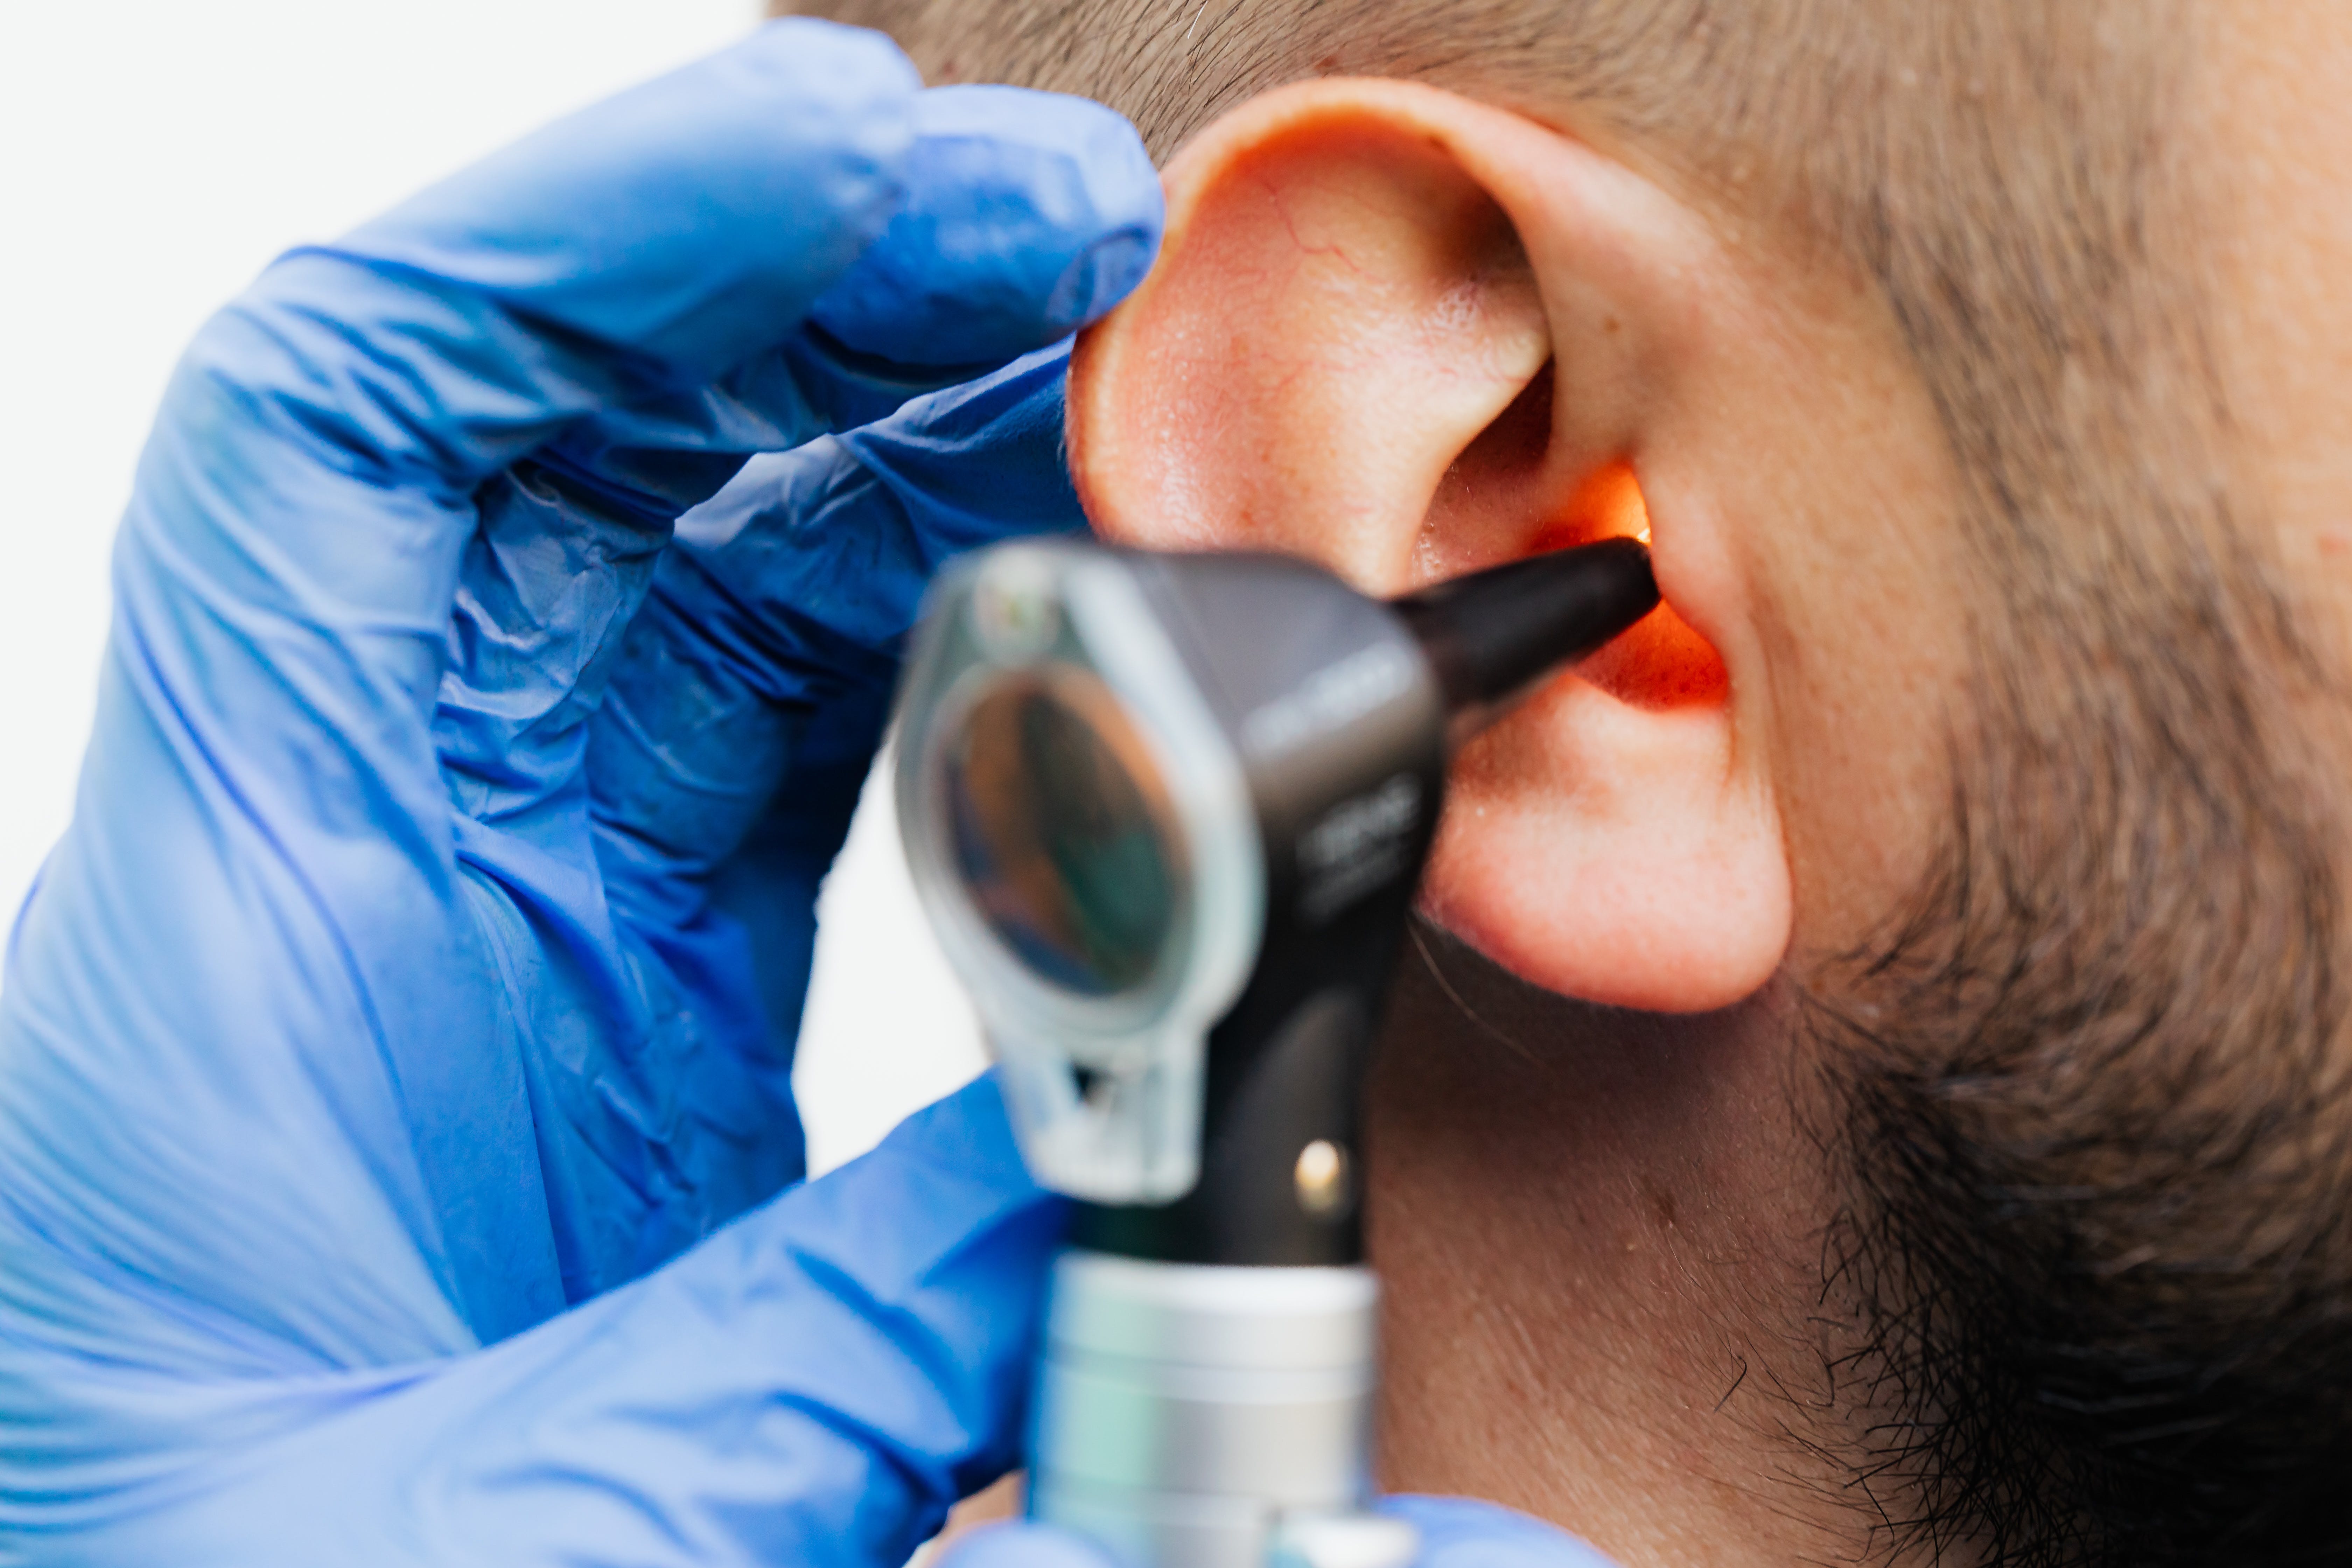 A patient having an ear examination. | Source: Pexels